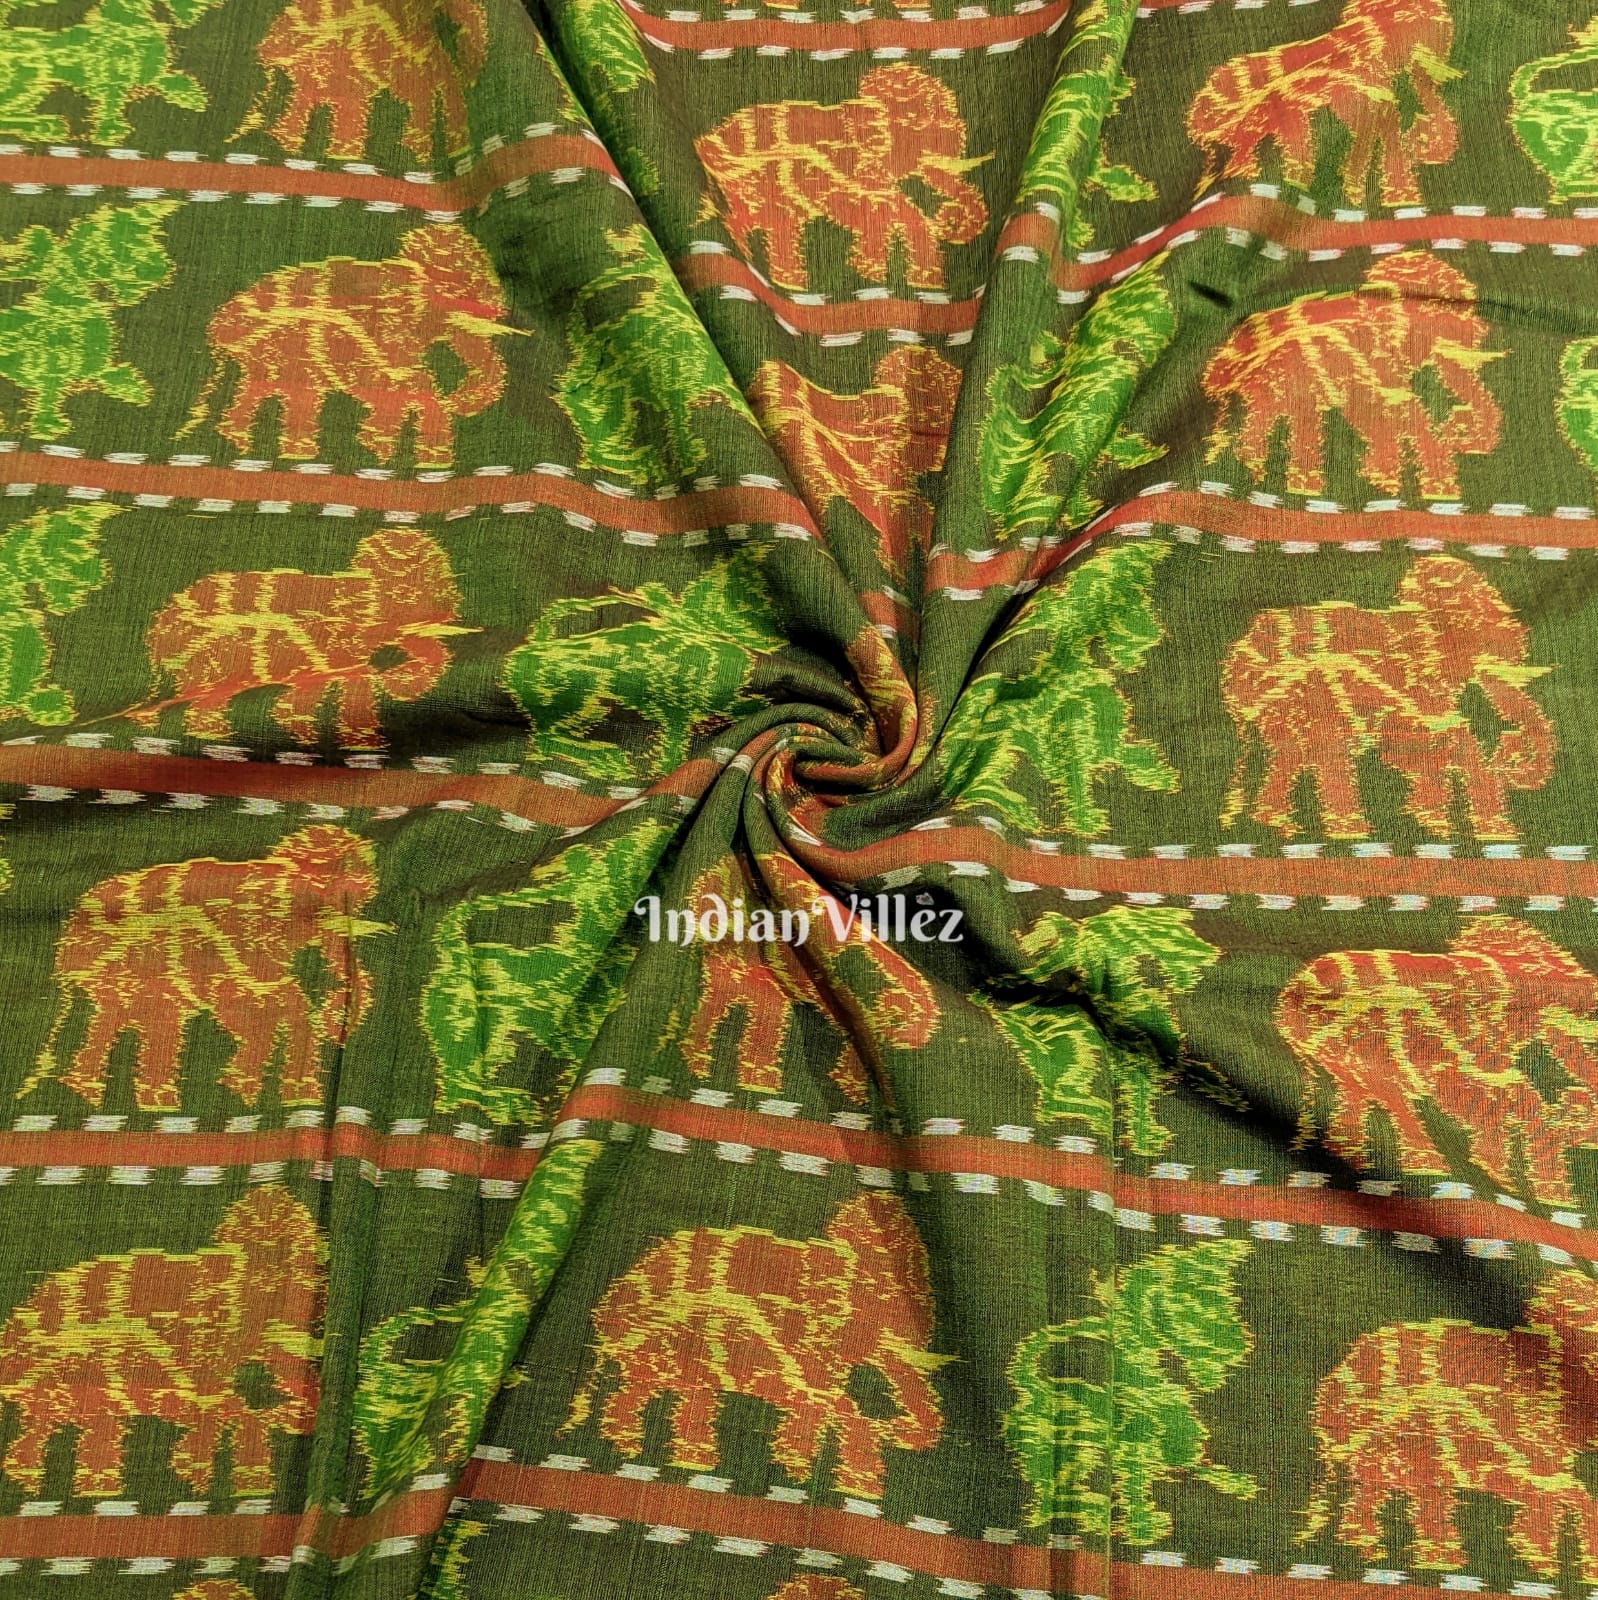 Dual Tone Elephant & Lion Design Sambalpuri Ikat Cotton Fabric